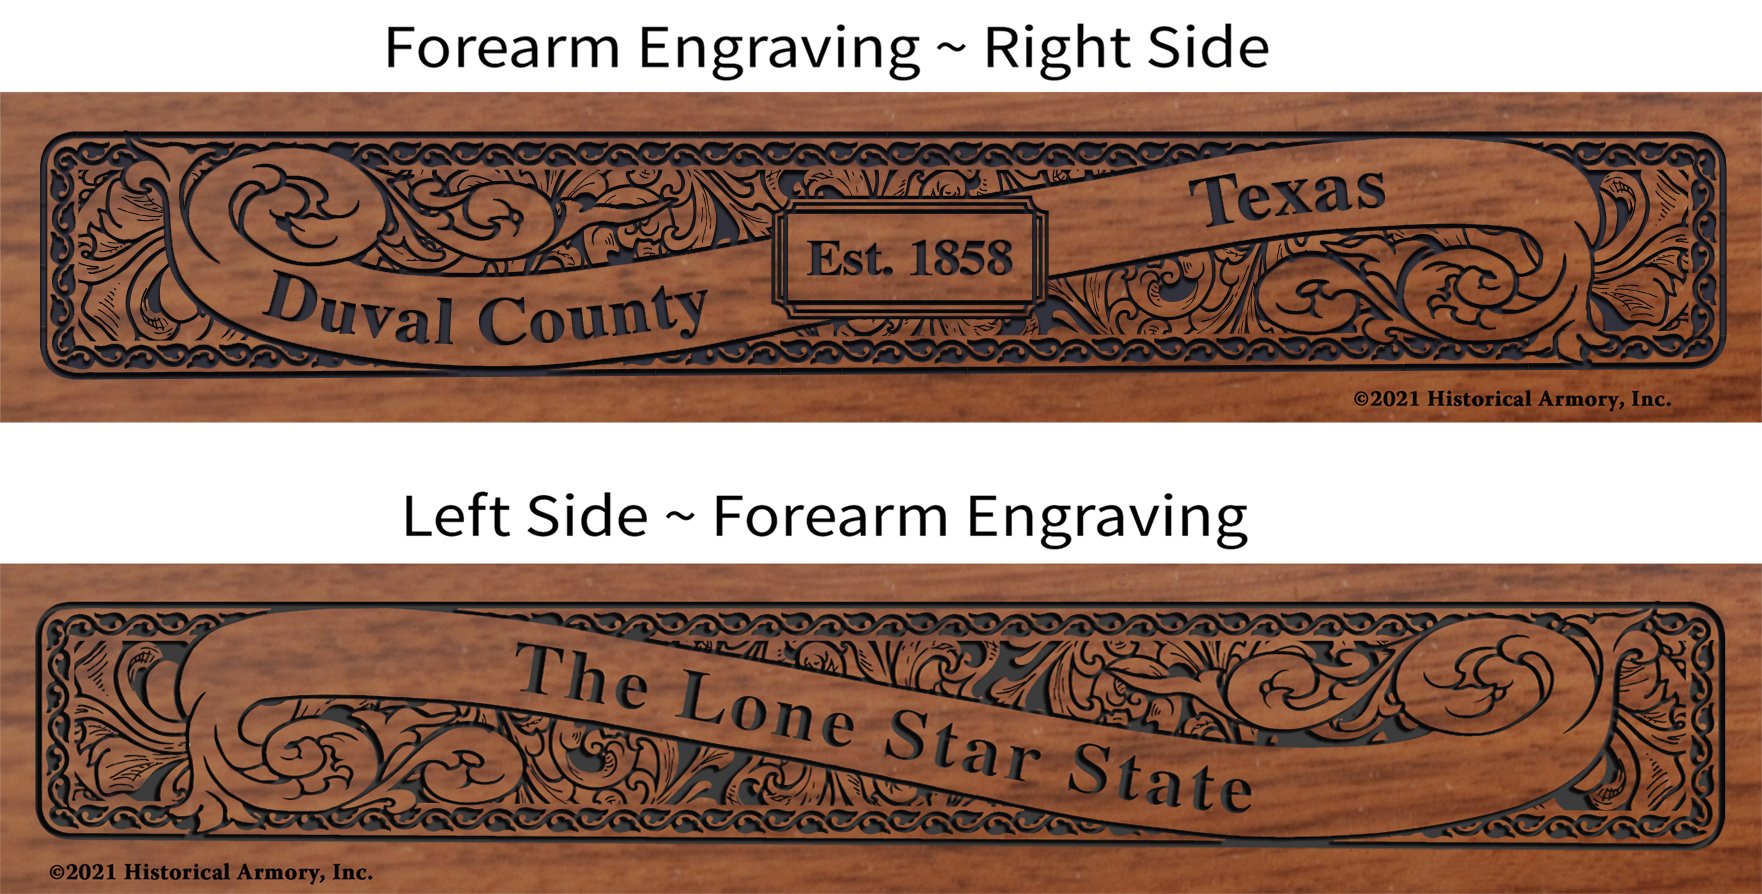 Duval County Texas Establishment and Motto History Engraved Rifle Forearm